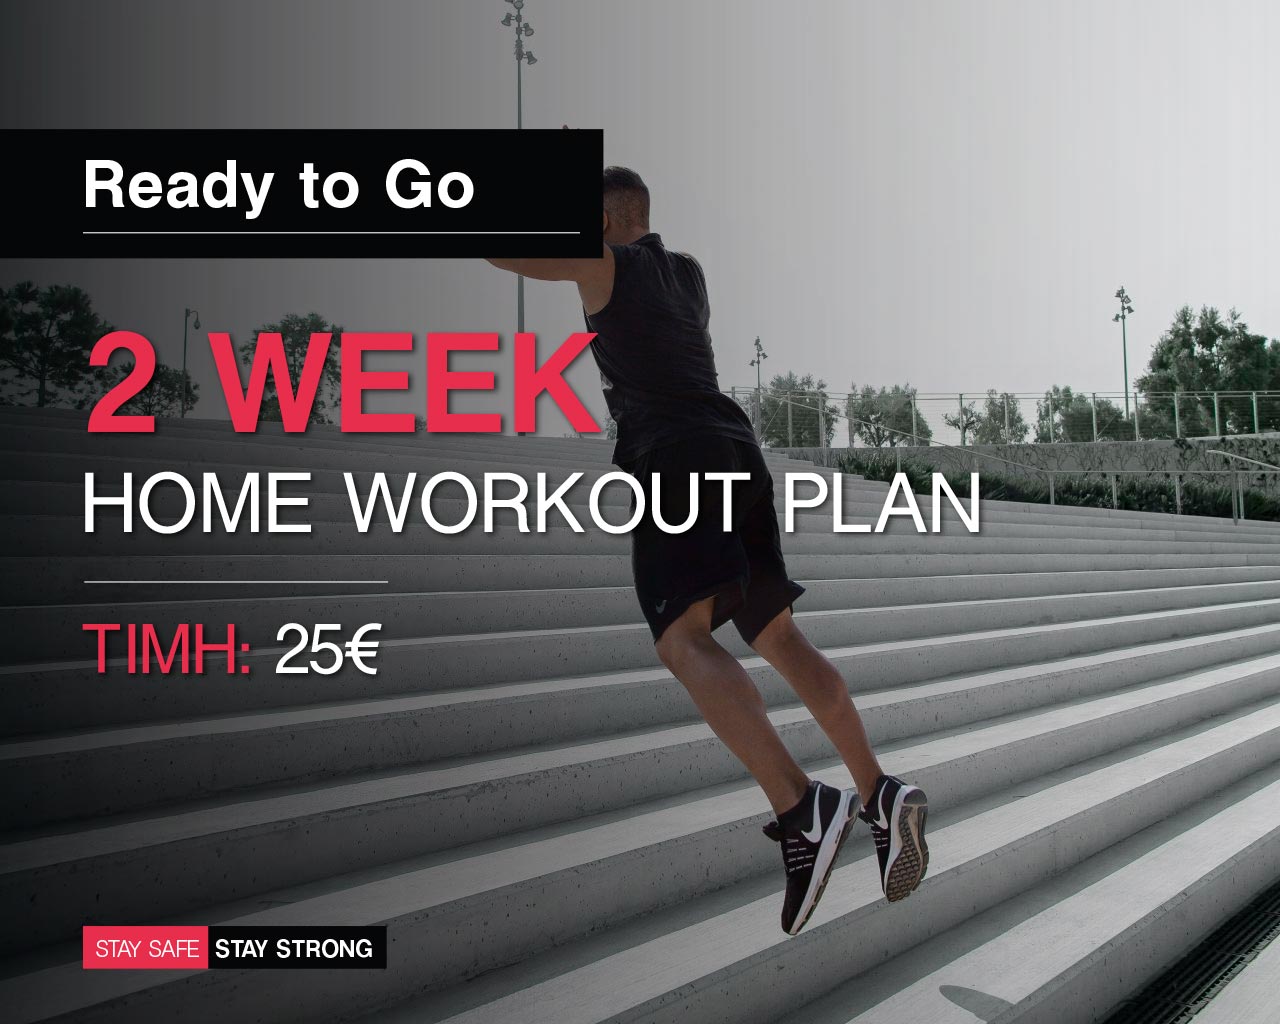 Home Workout Plan 2 week - Πρόγραμμα Γυμναστικής στο σπίτι - 2 Εβδομάδες